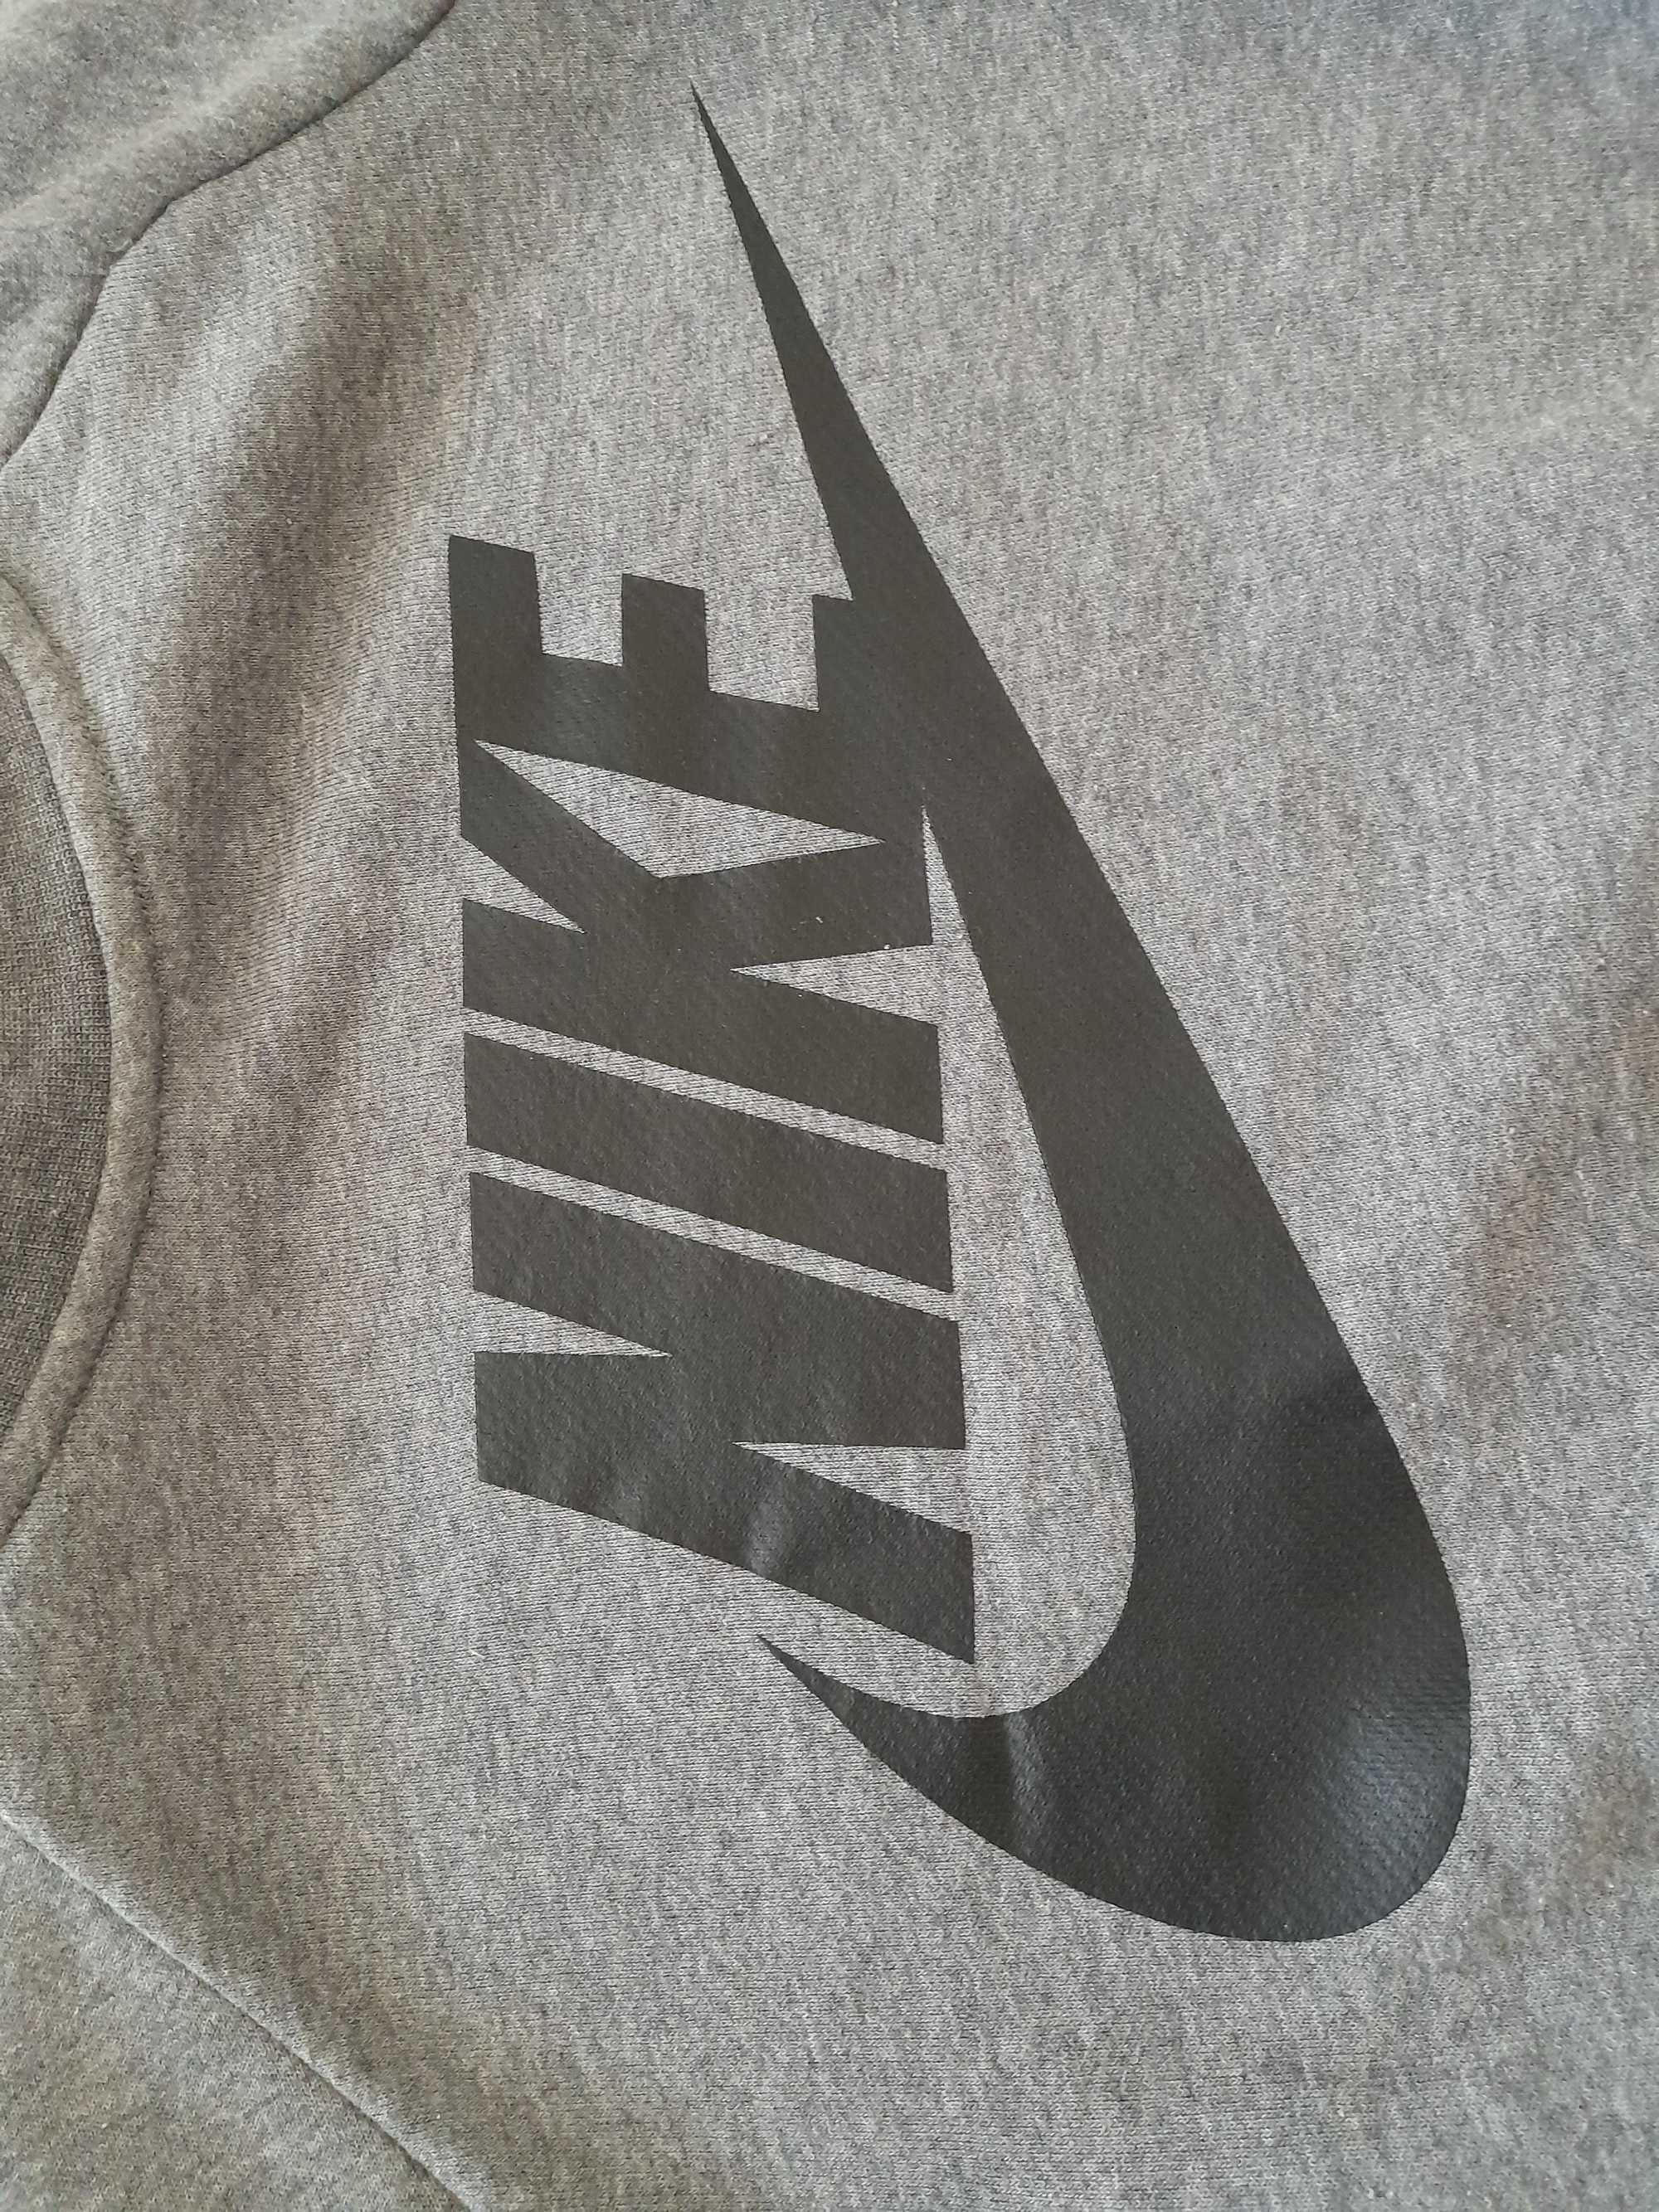 Hanorac Nike bumbac, s, 50 lei, unisex